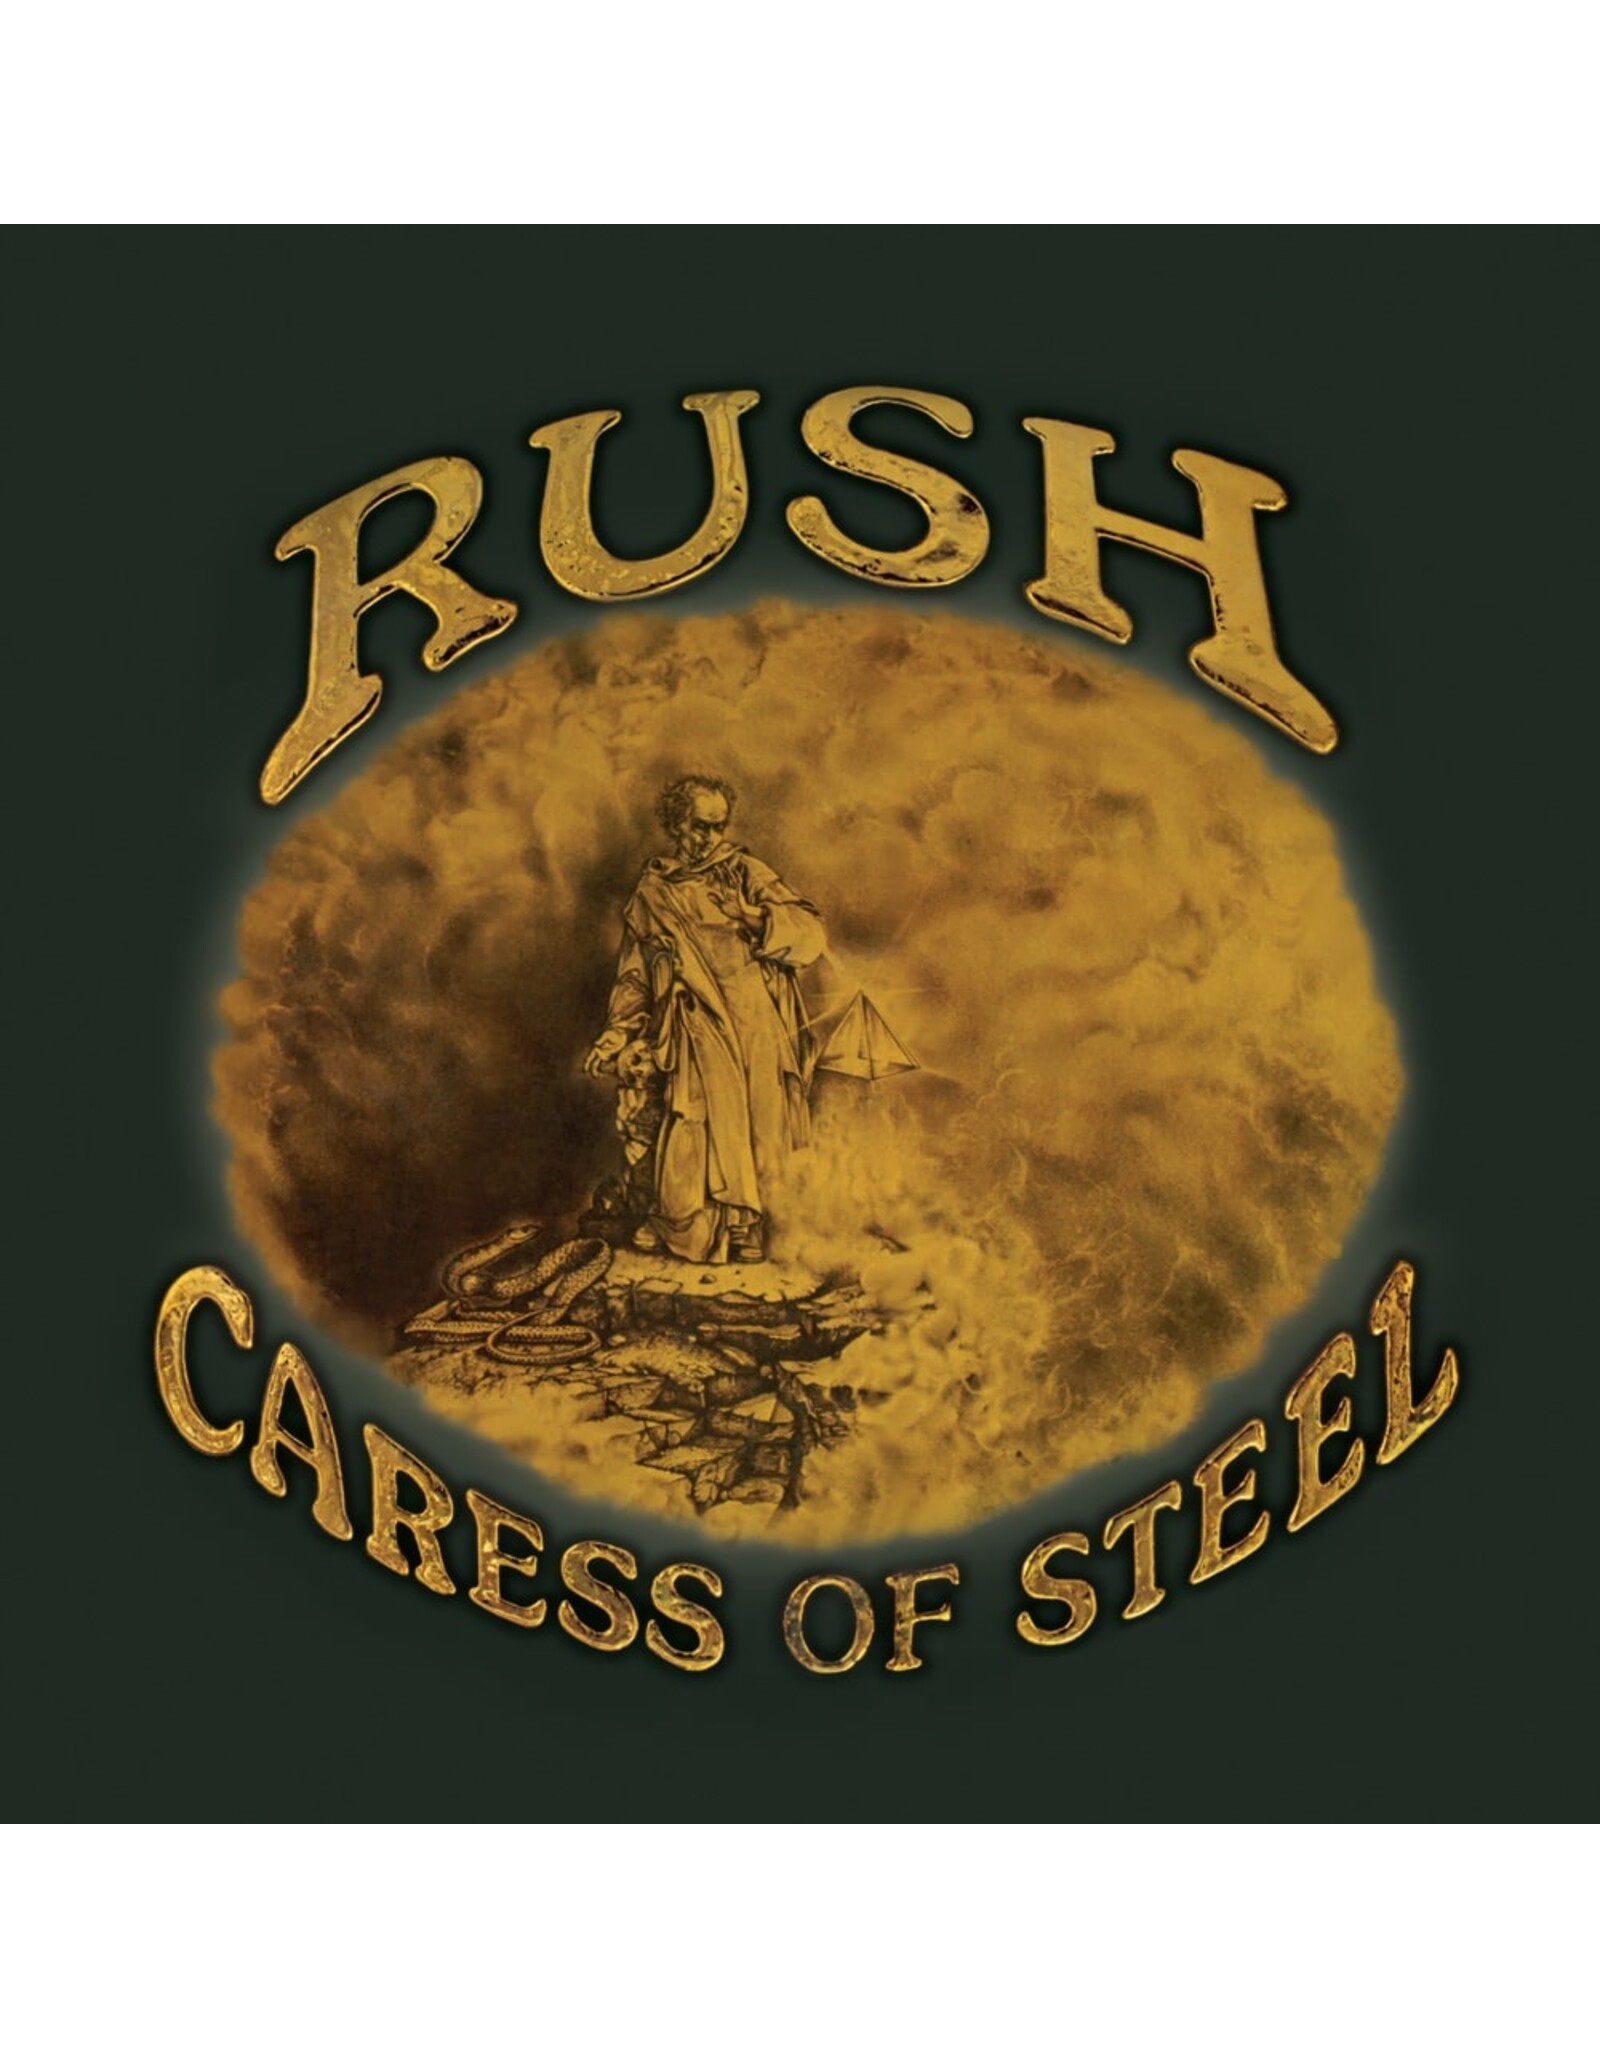 Rush - Caress Of Steel (2015 Remaster)